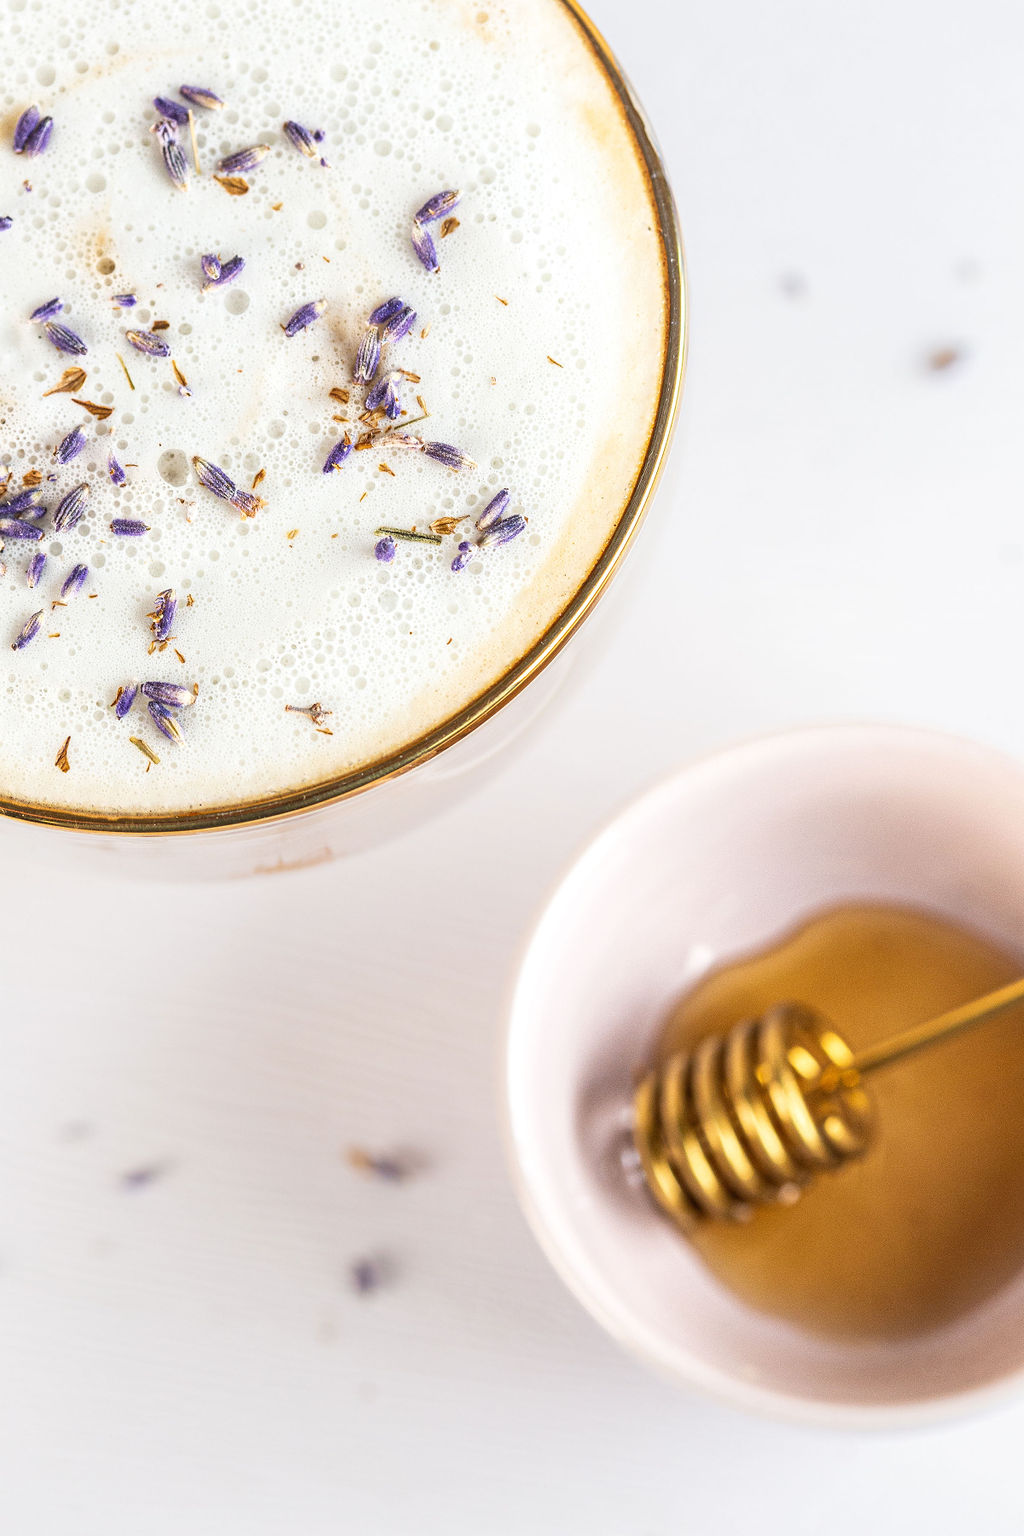 Lavender honey latte close up macro image for coffee shop branding product photographer